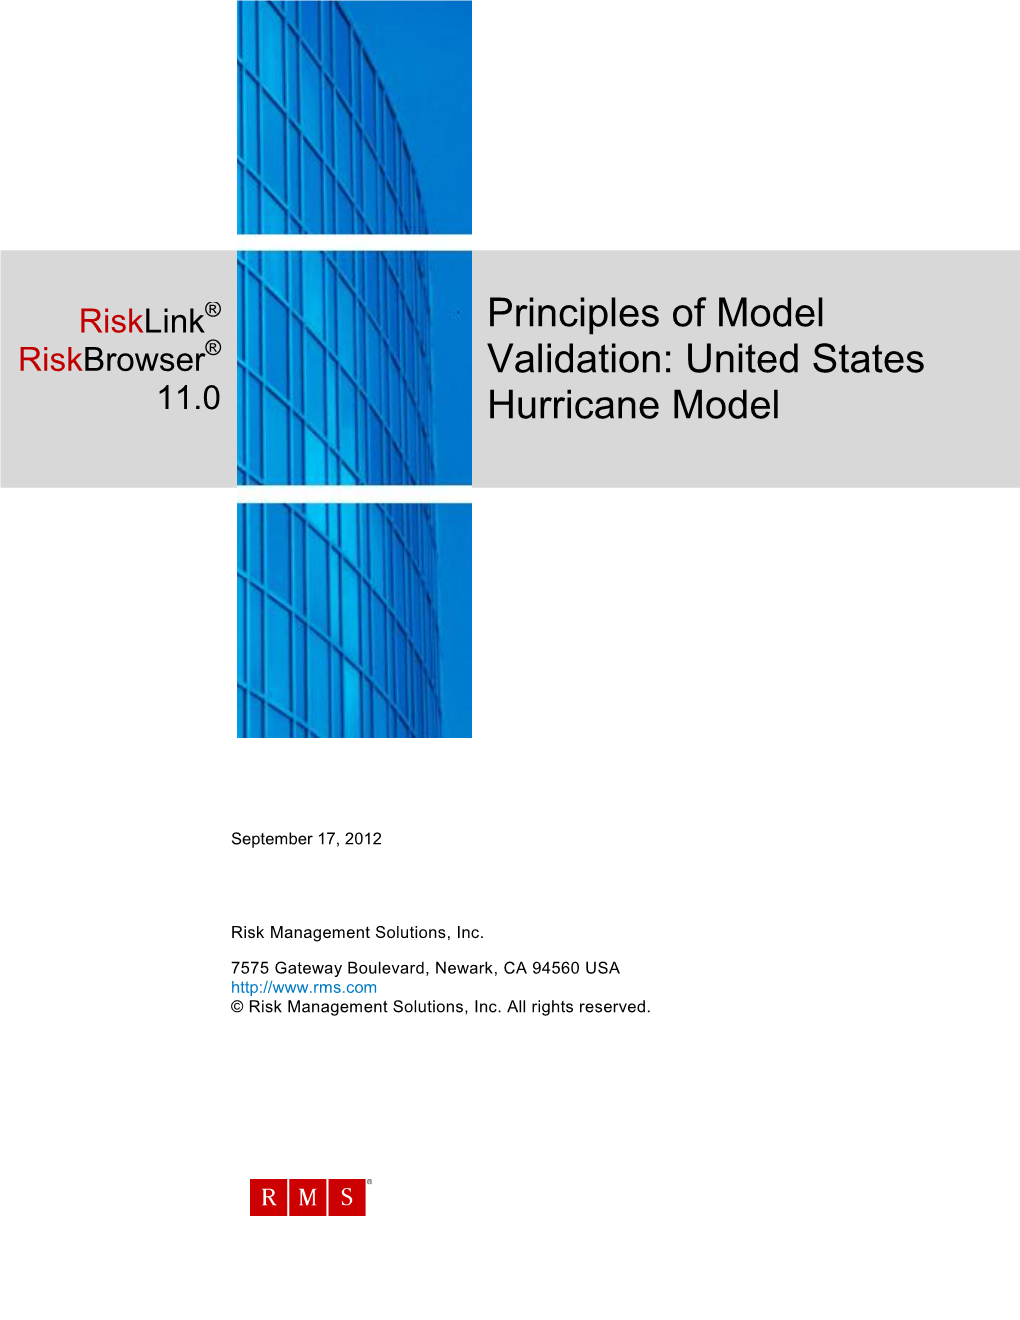 Principles of Model Validation: United States Hurricane Model